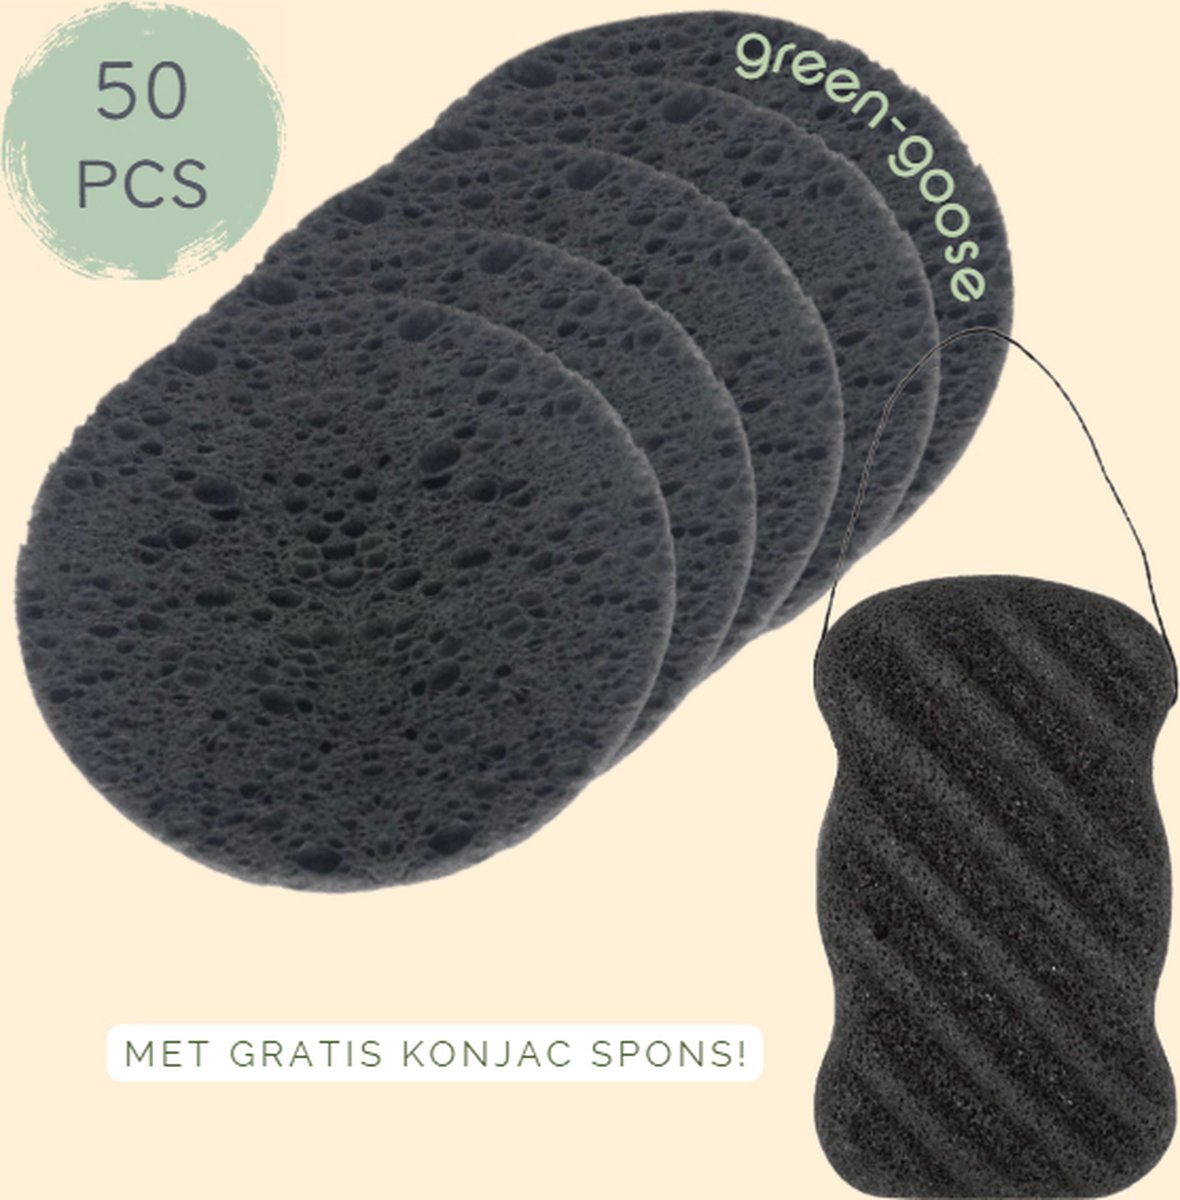 Kekka - 50 stuks Cosmetische Cellulose Gezichtsreiniging sponsen + 1 Konjac spons cadeau- Reinigingsdoekjes